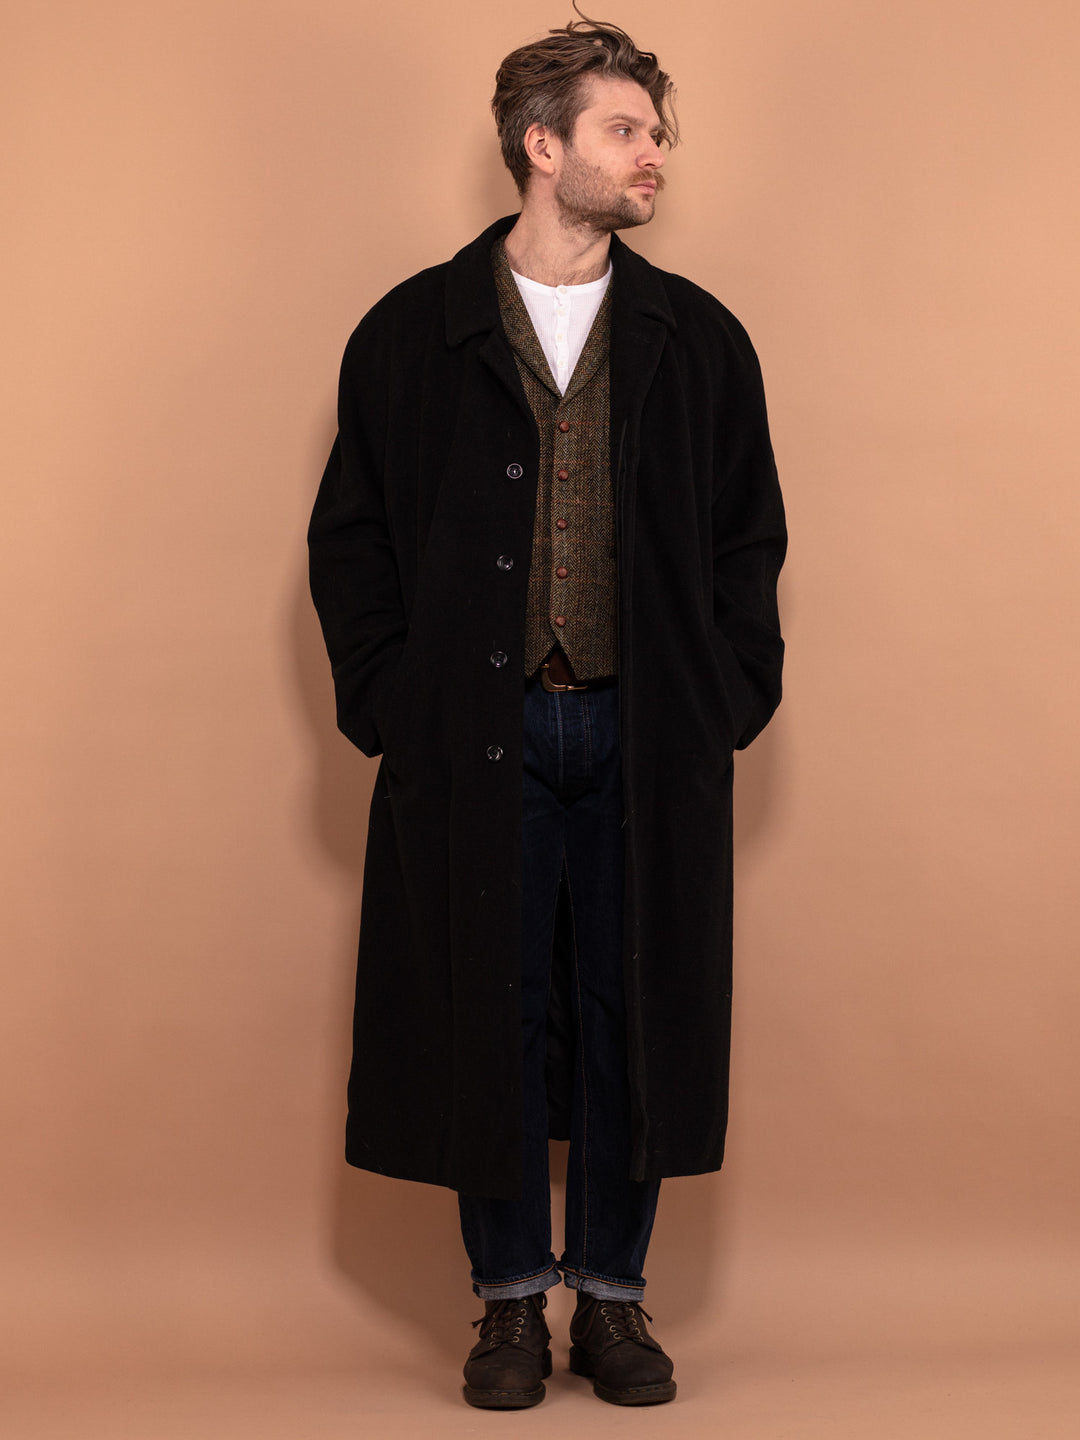 Wool and Cashmere Coat 90's, Size XXL Large, Men Vintage Overcoat, Gray Wool Topcoat, Peaky Blinders Coat, Vintage Minimalist Menswear